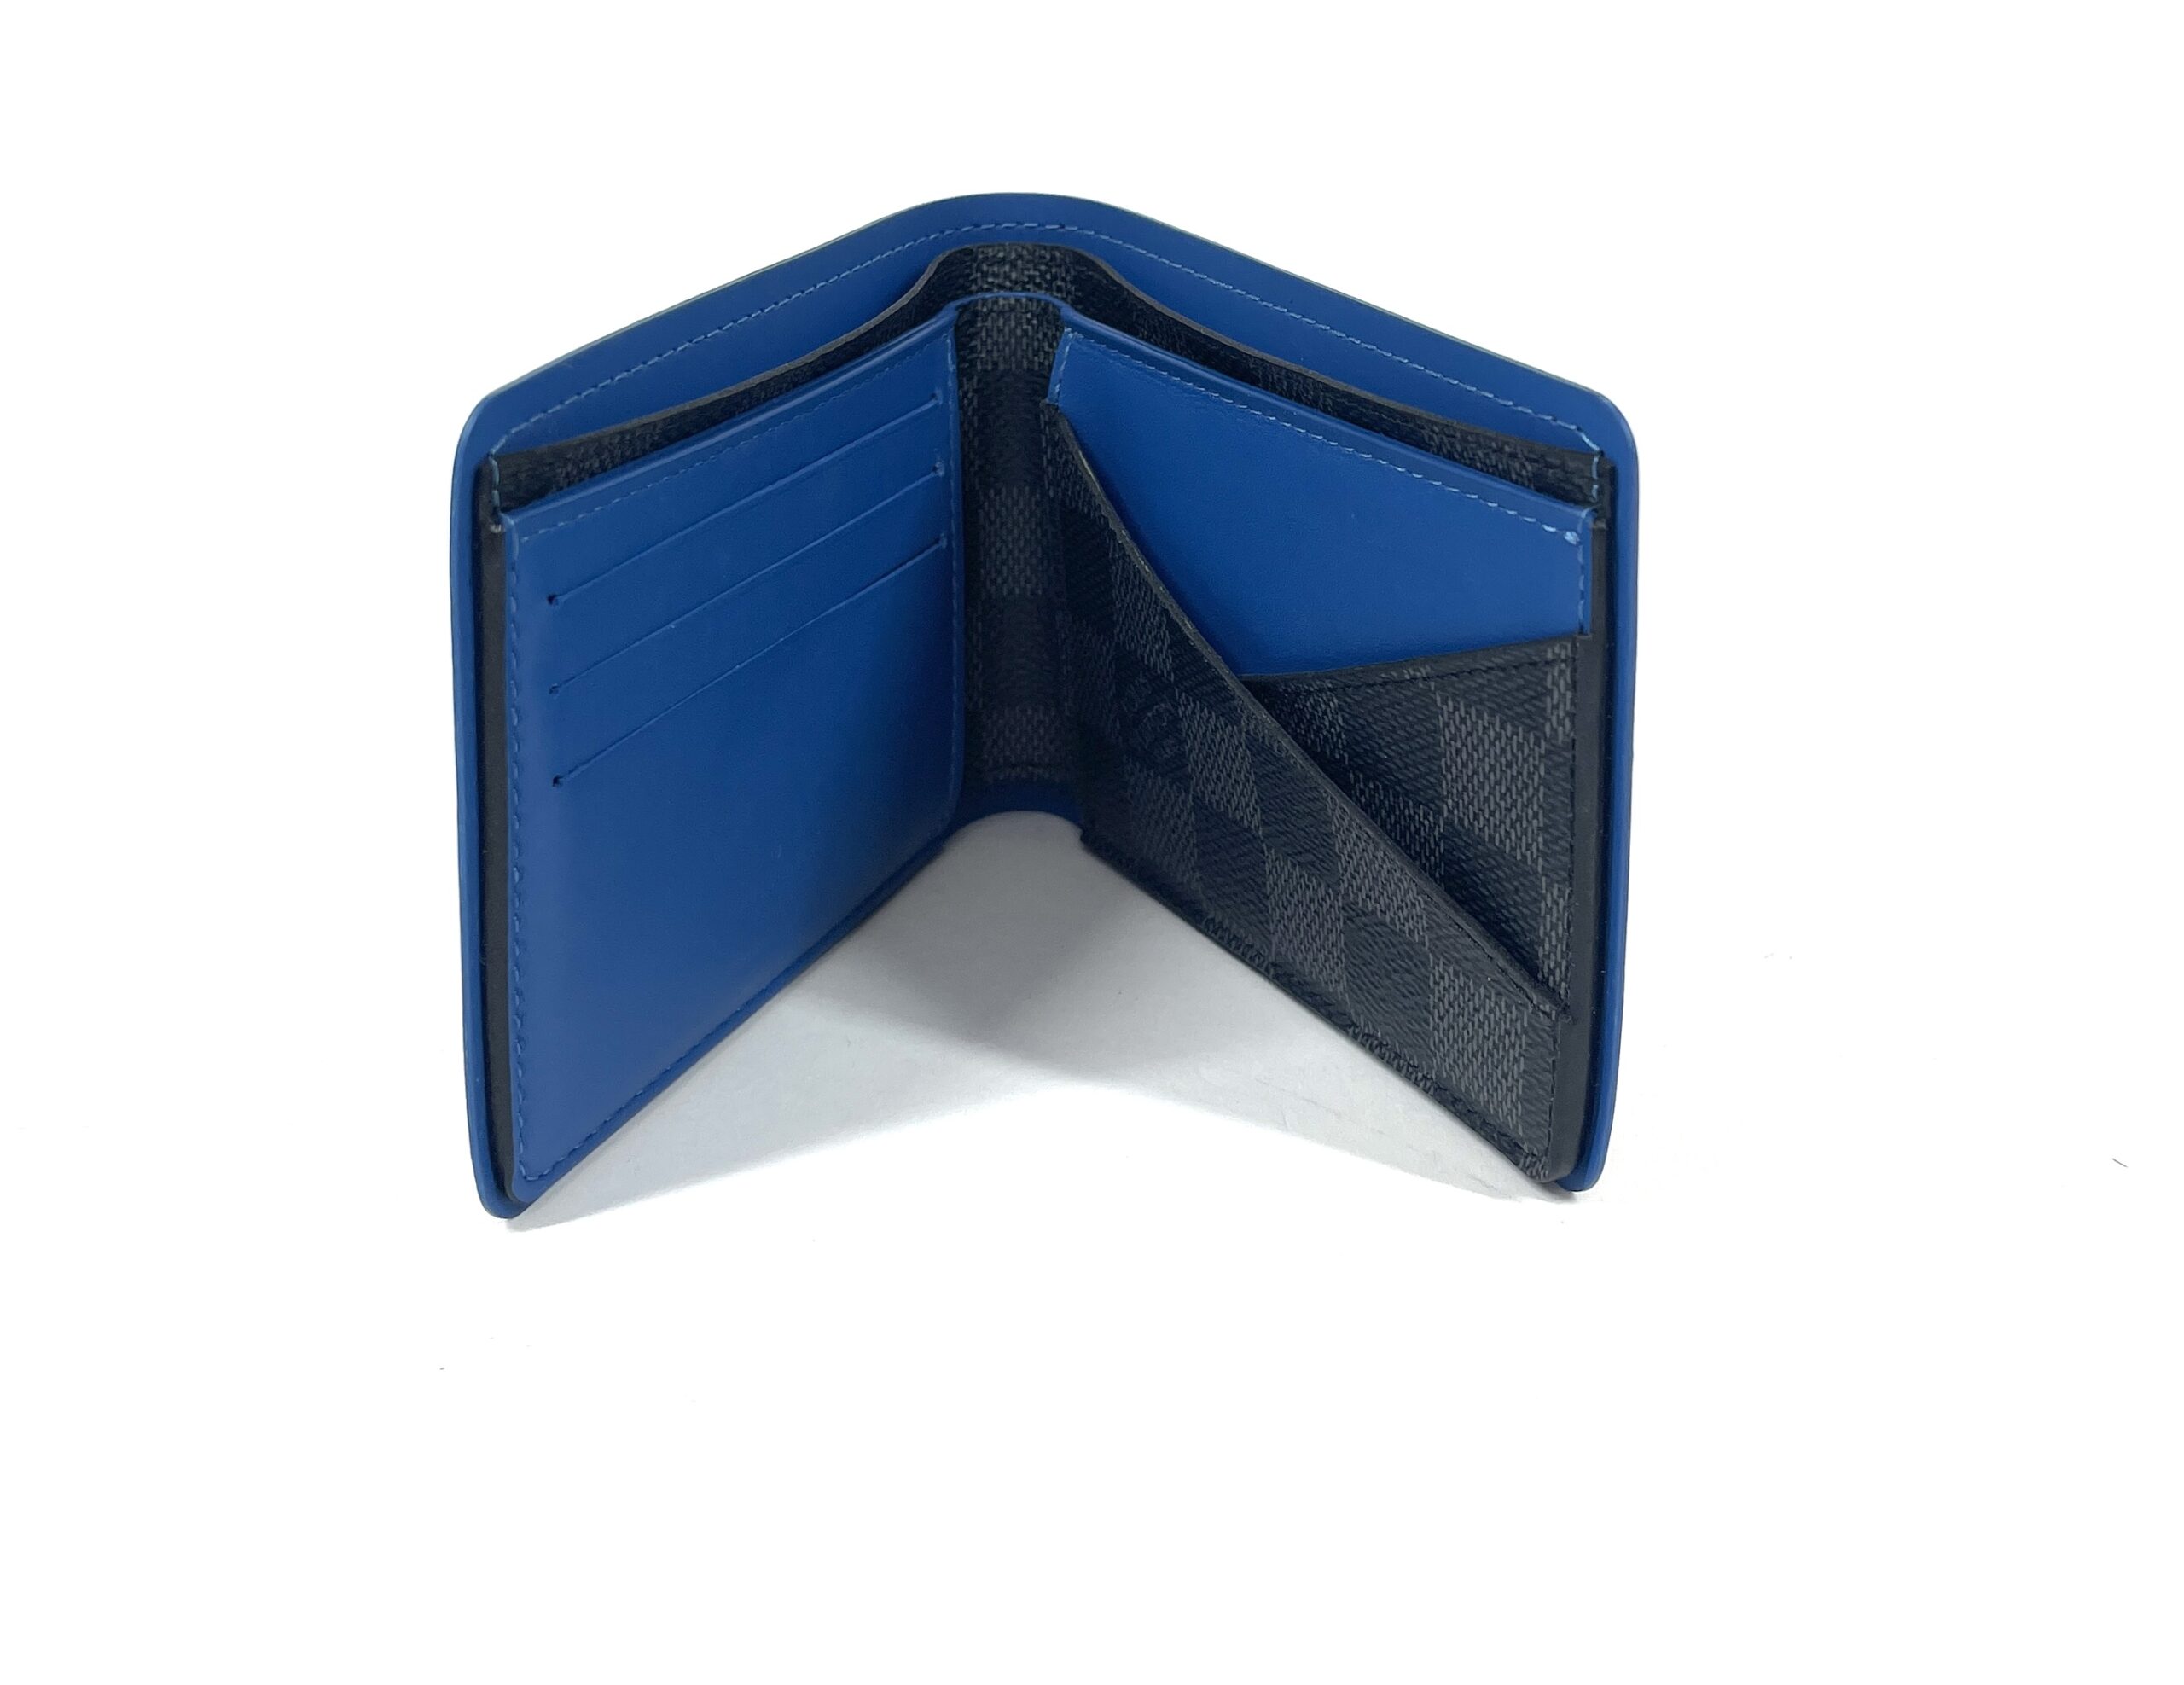 Louis Vuitton Slender Wallet In Blue